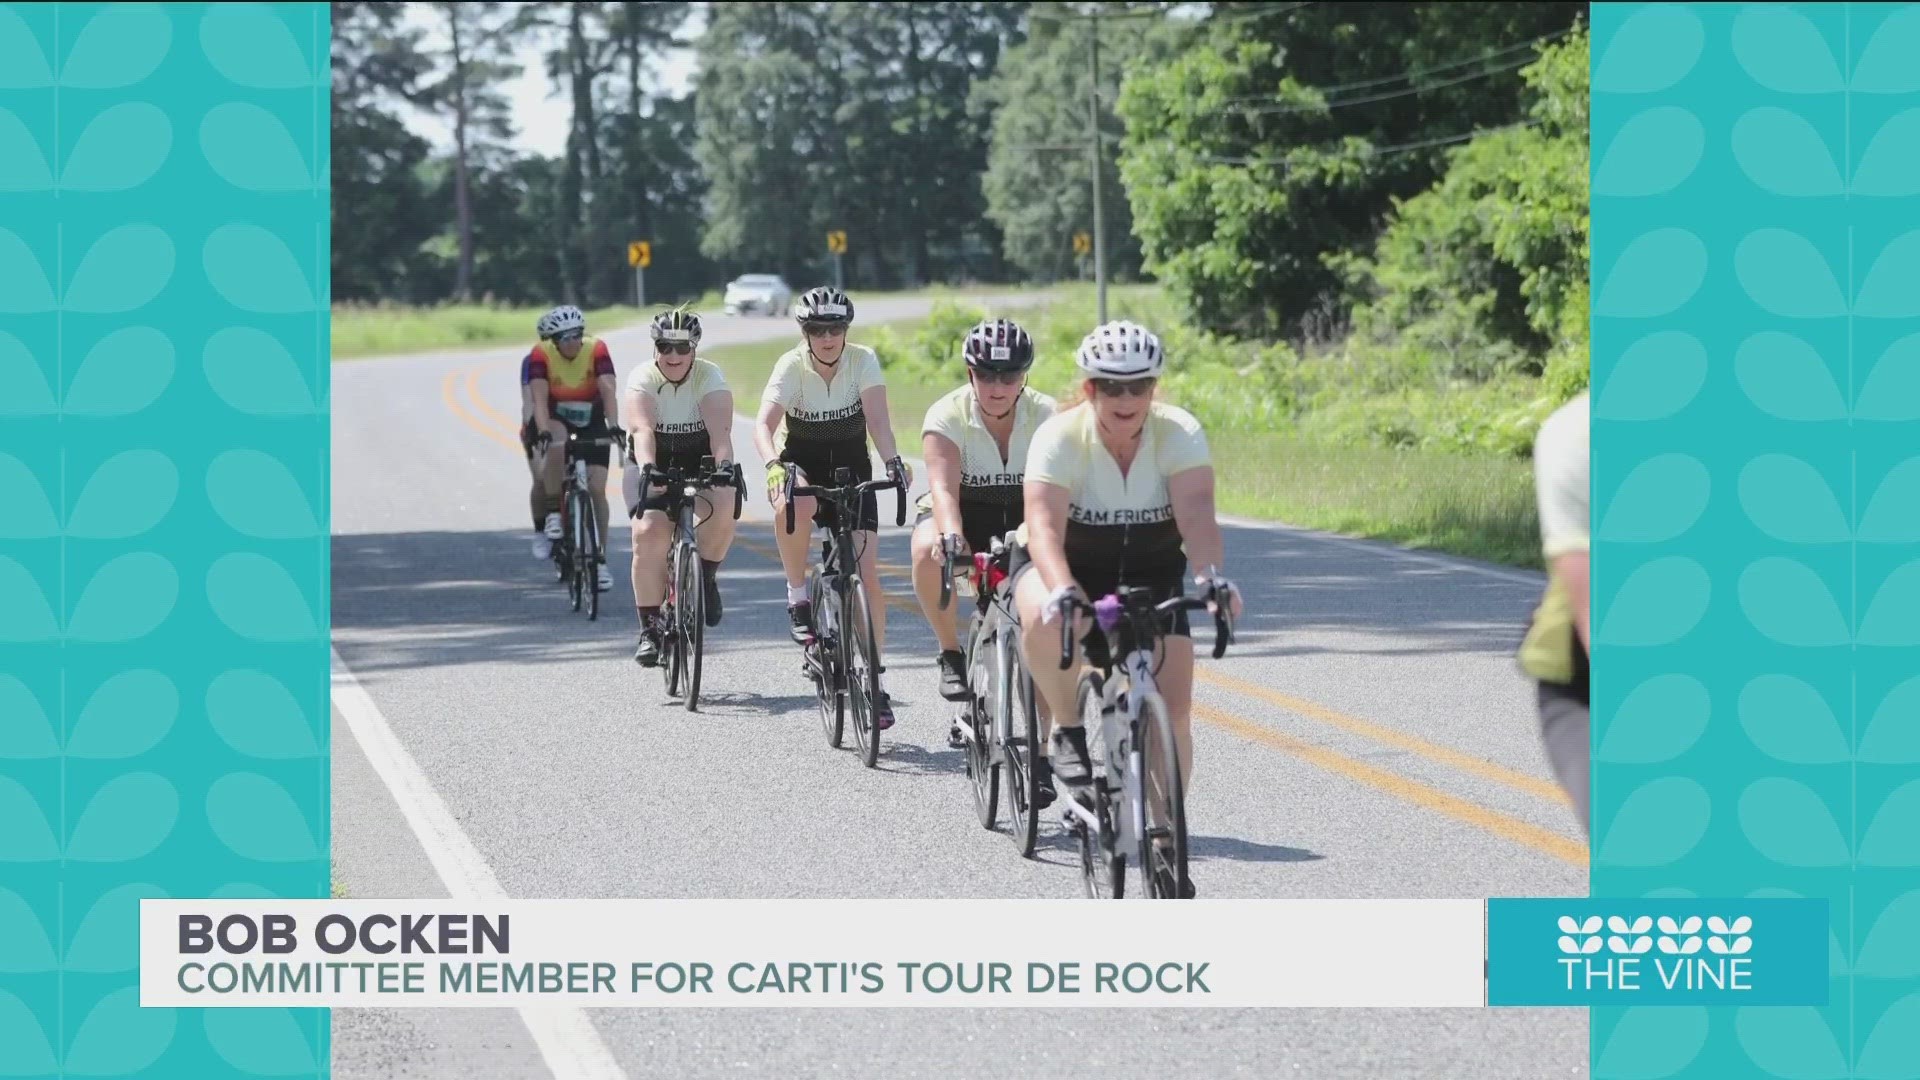 Bob Ocken tells us more about CARTI's Tour de Rock fundraising event.